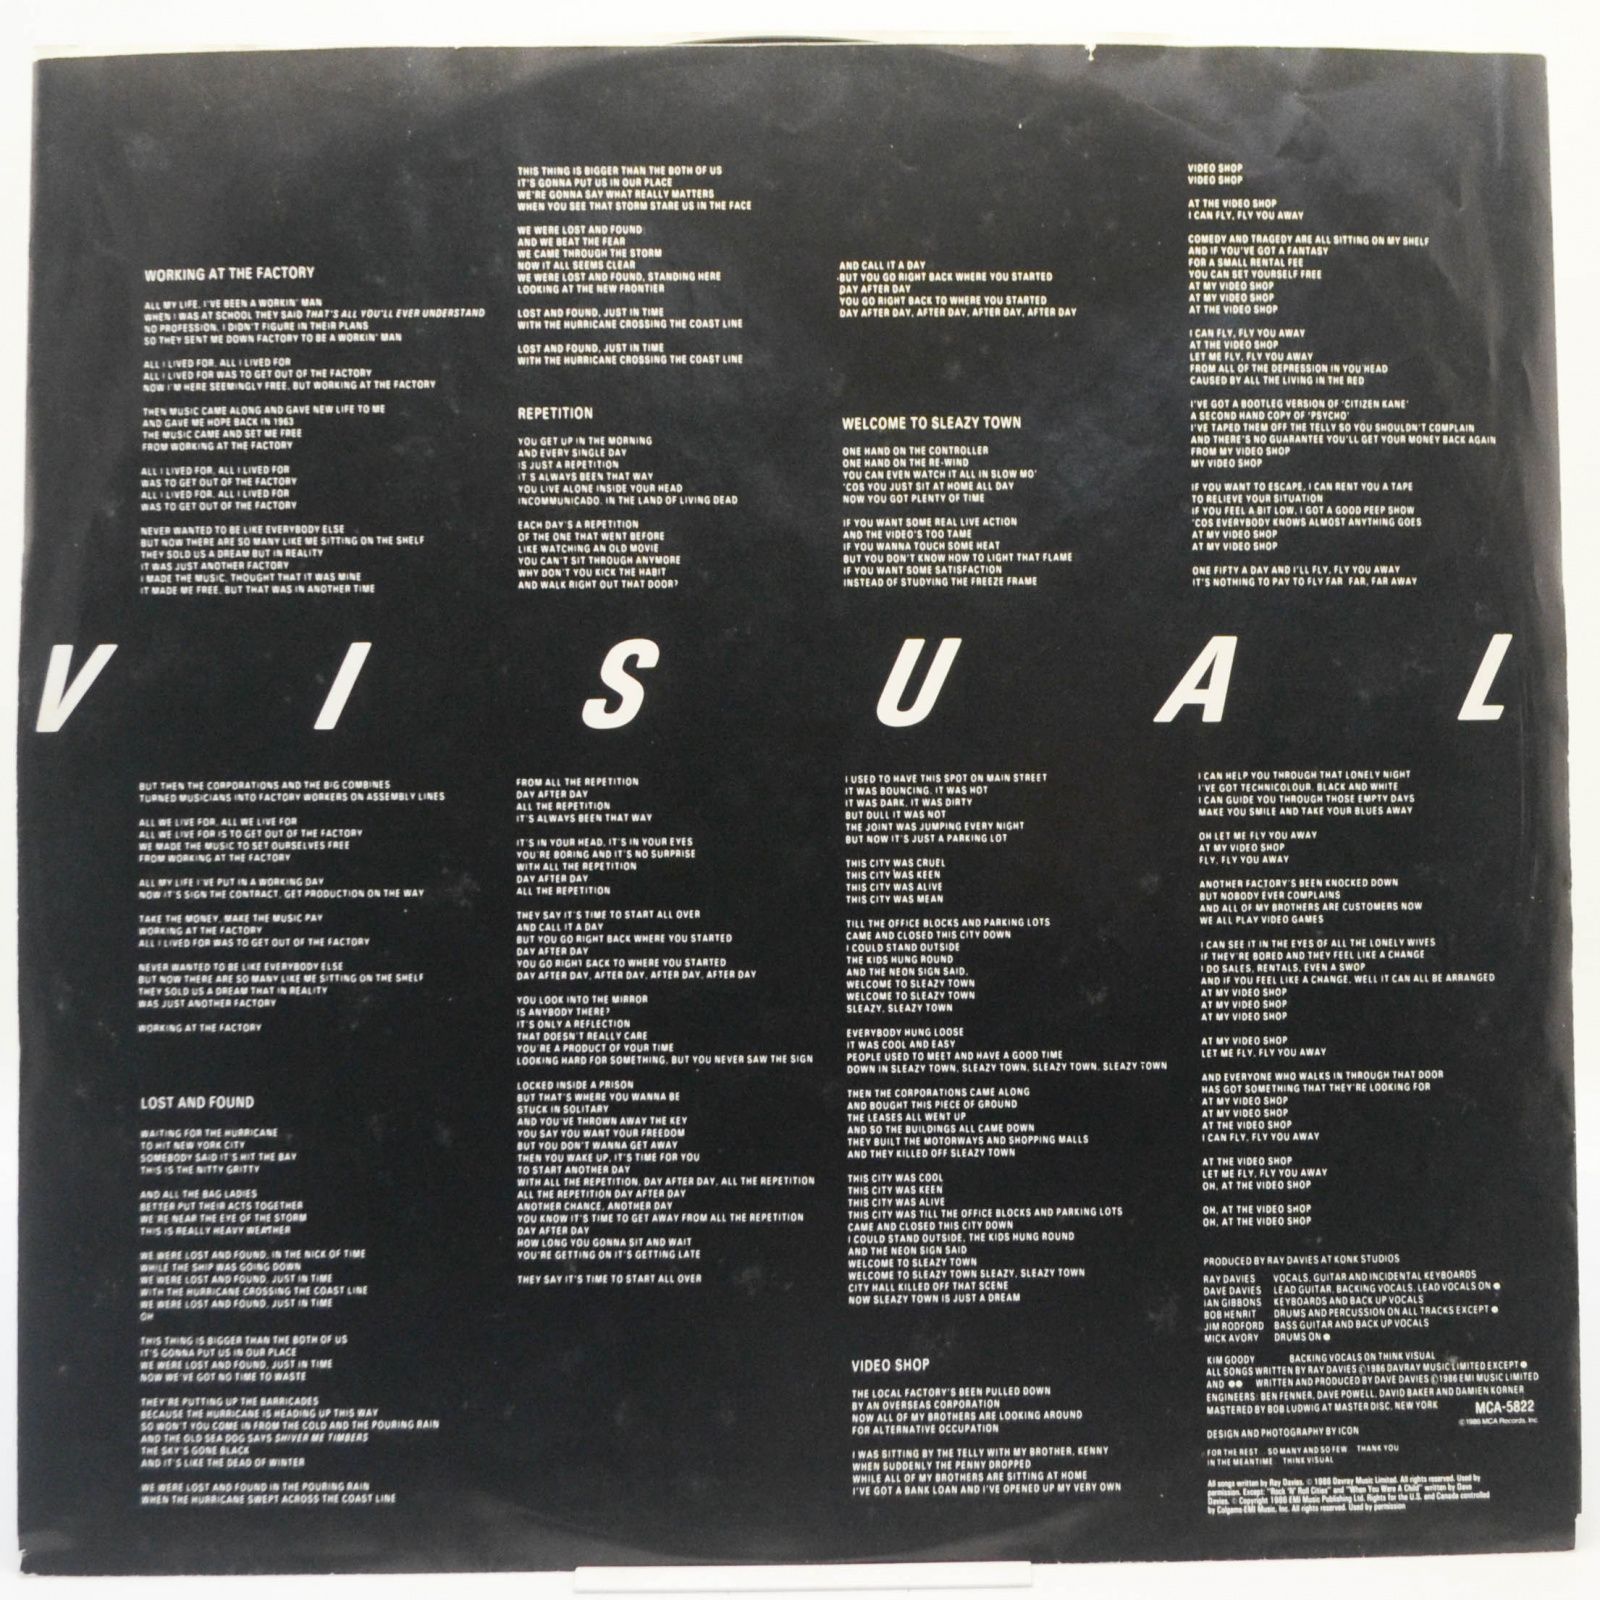 Kinks — Think Visual (USA), 1986